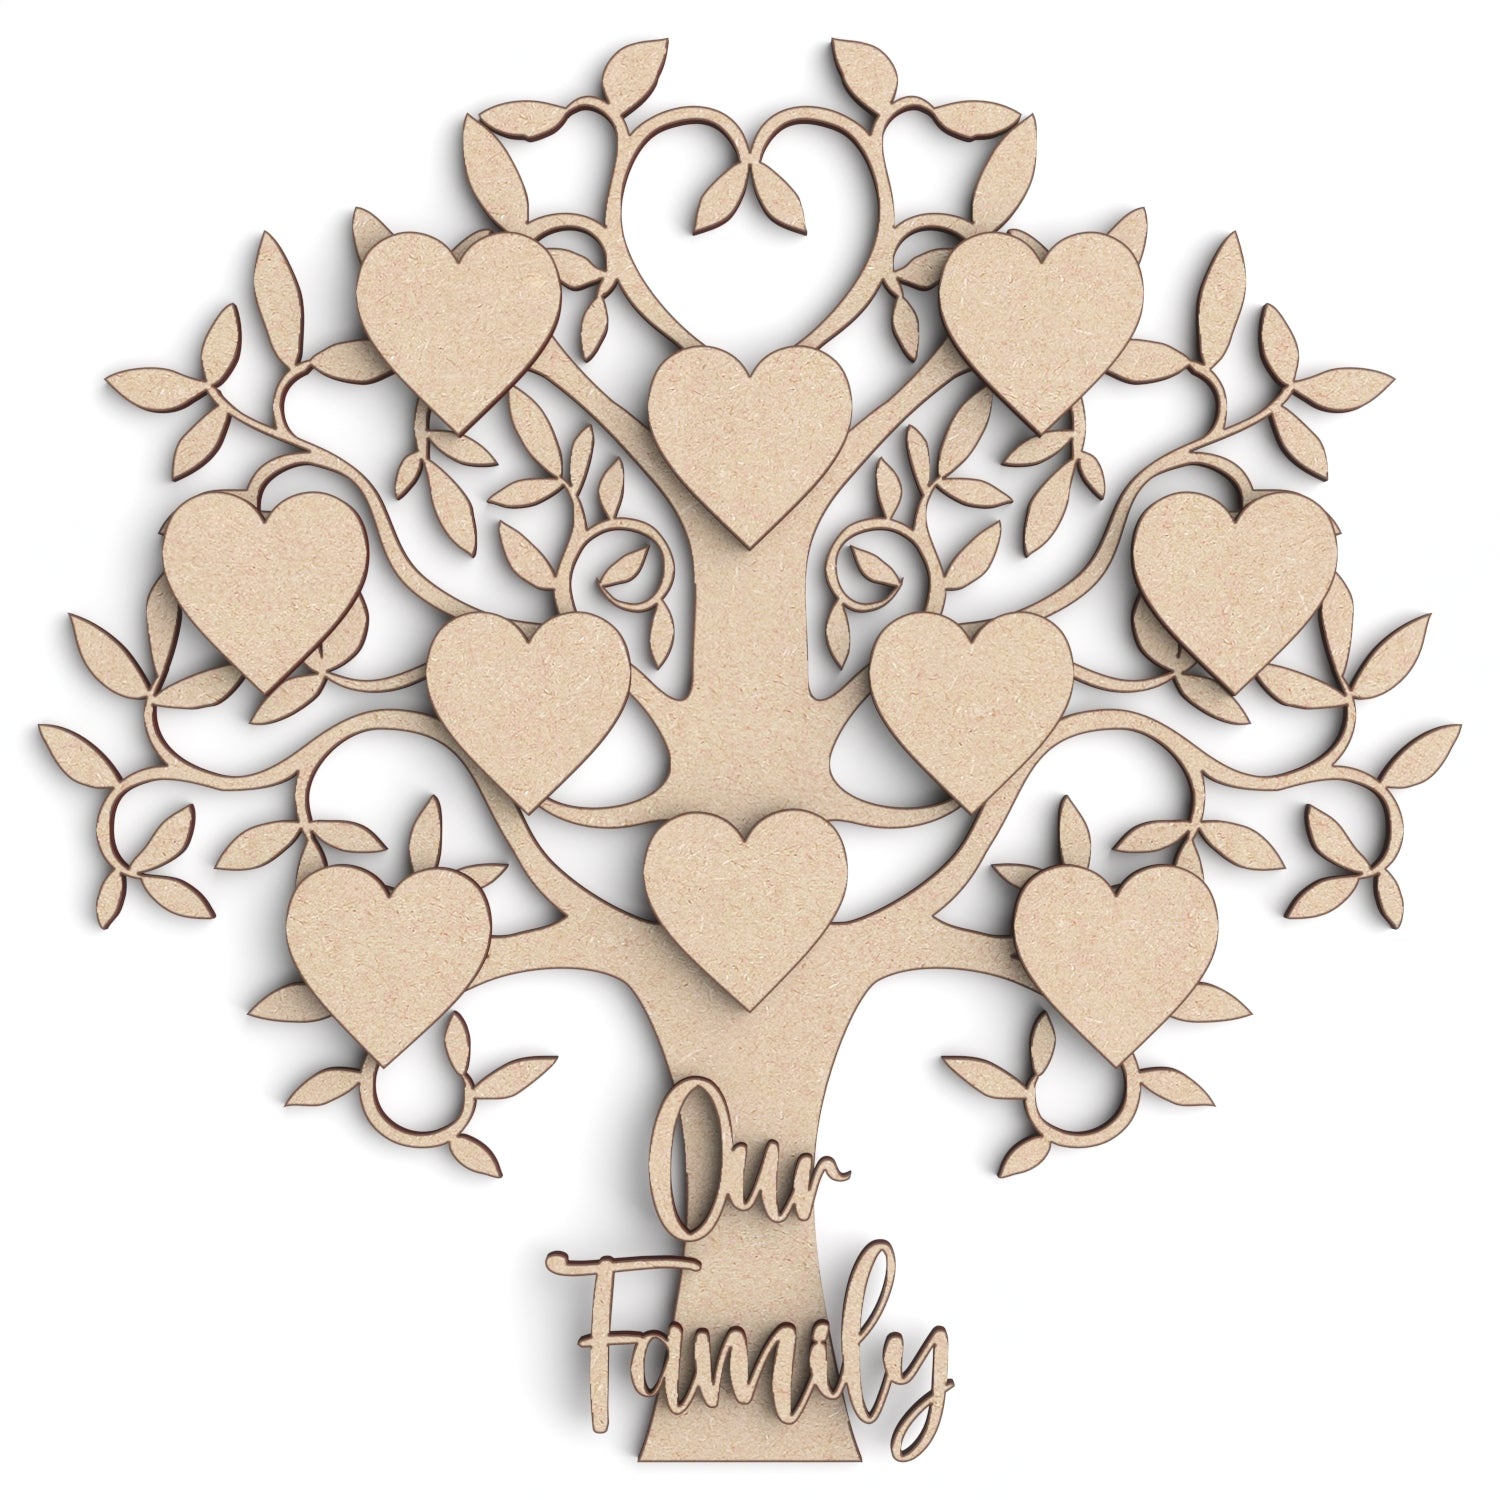 Family Tree wooden craft shape Decoration Kit.